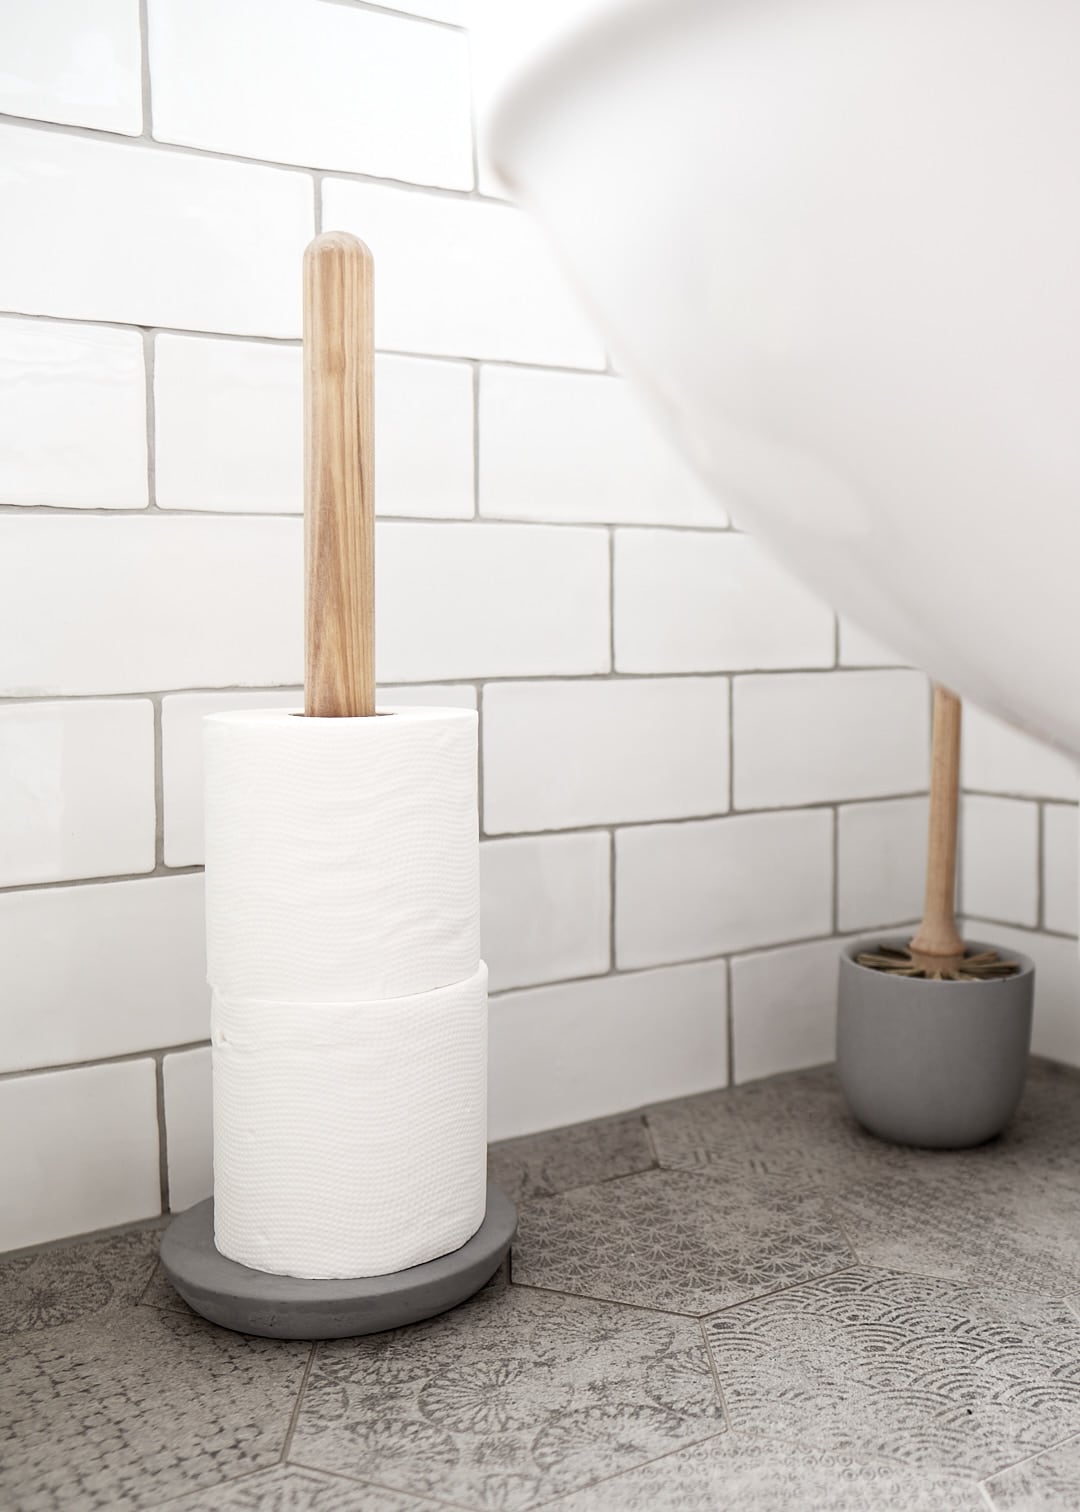 An Iris Hantverk toilet roll holder in a bathroom with a wooden handle.